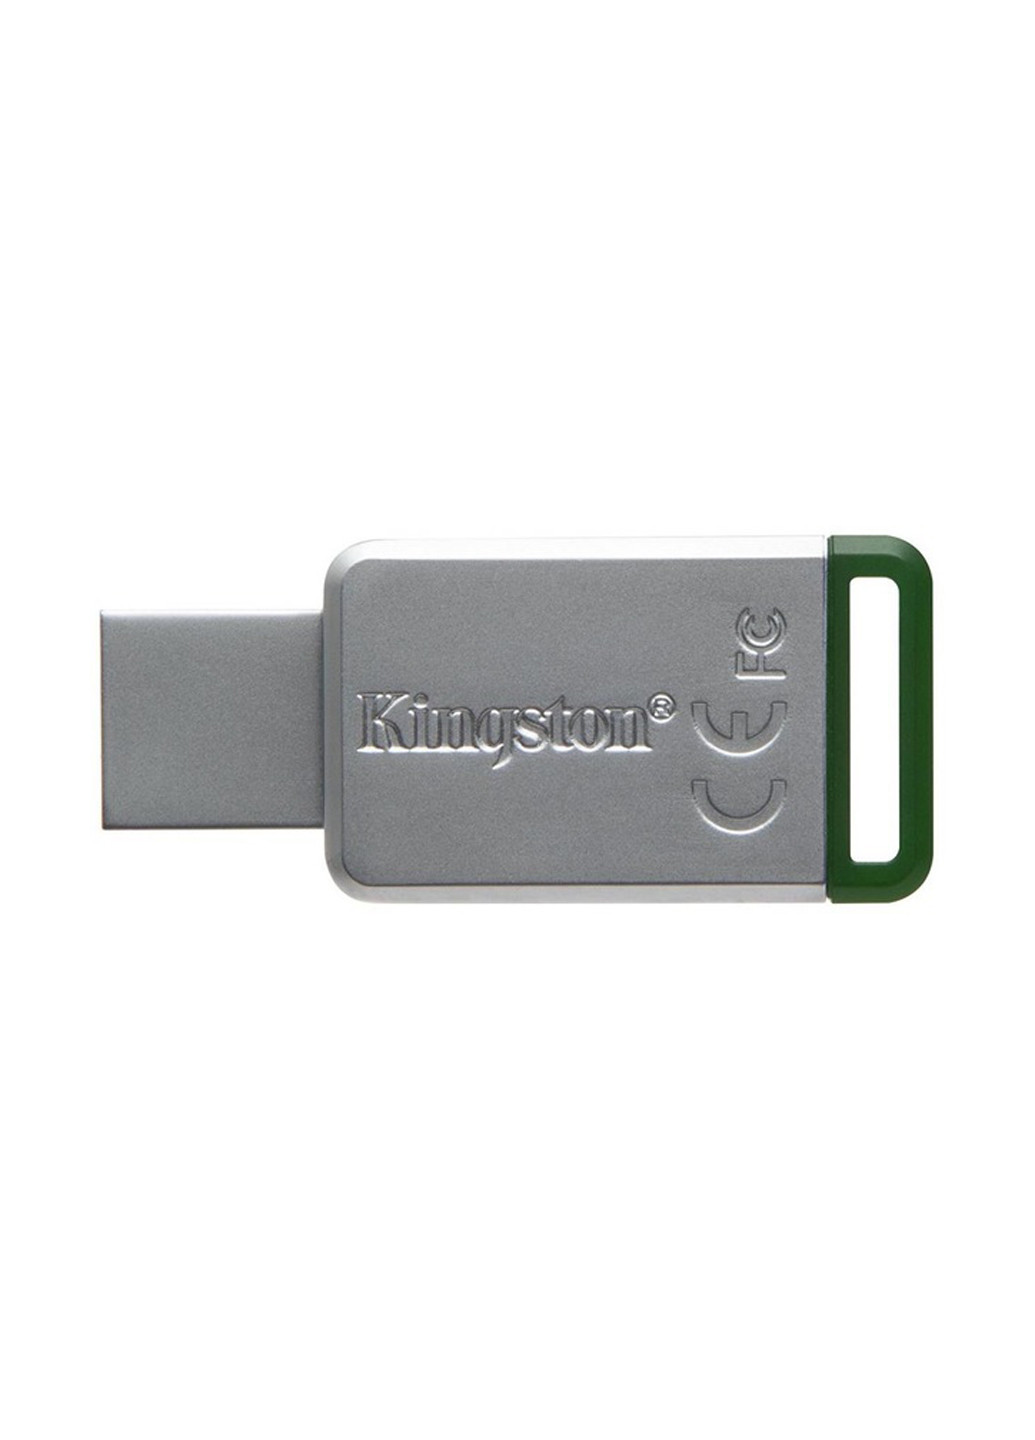 Флеш пам'ять USB DataTraveler 50 16GB Green (DT50 / 16GB) Kingston флеш память usb kingston datatraveler 50 16gb green (dt50/16gb) (135165482)